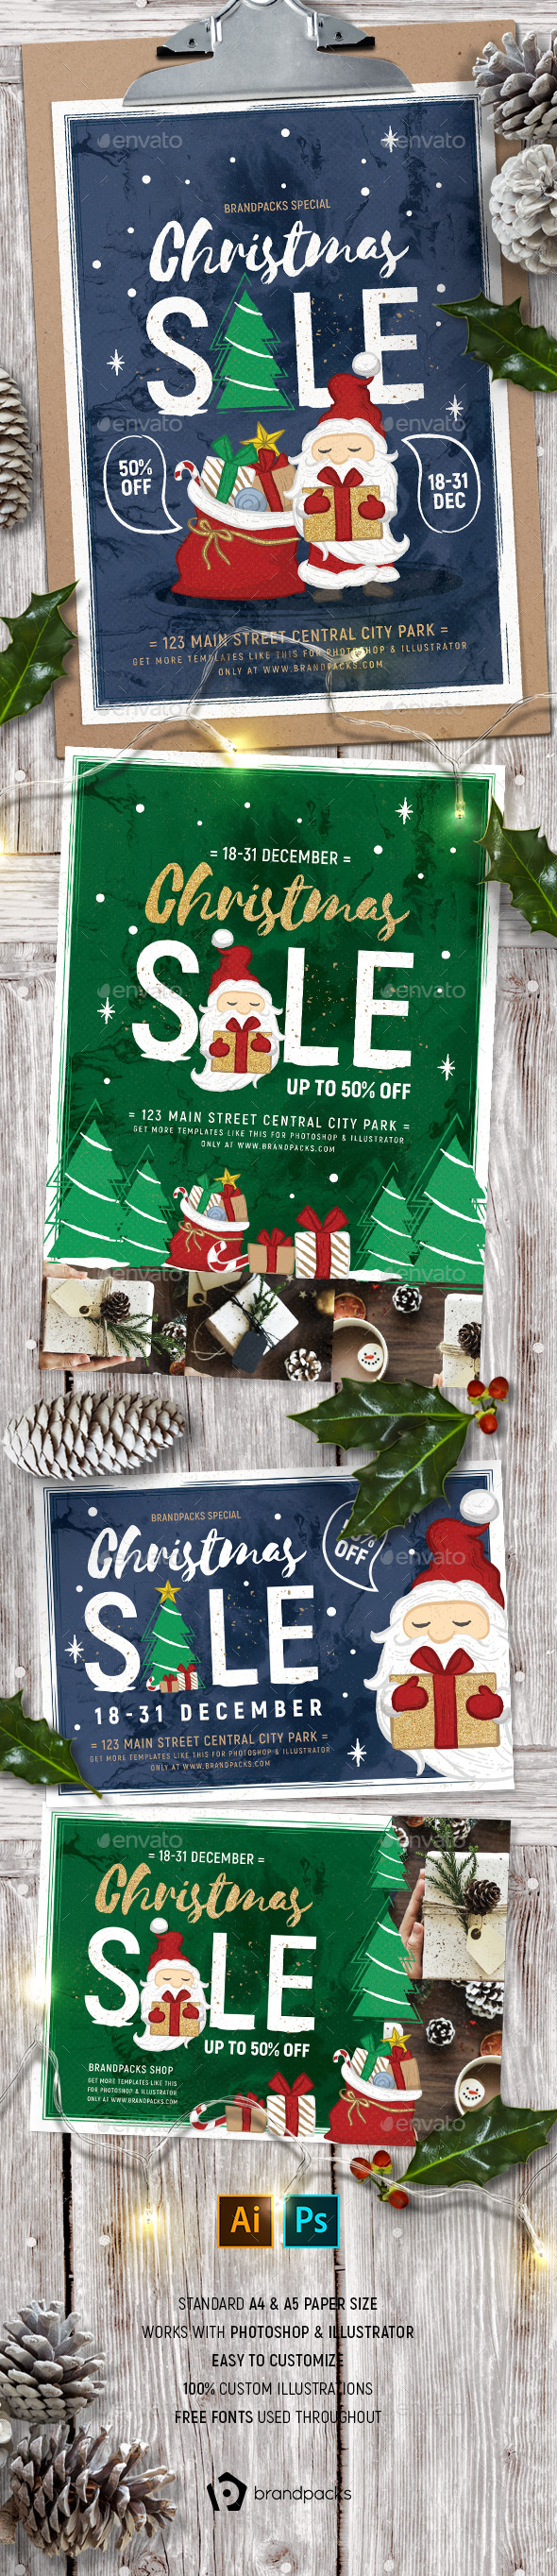 Christmas Sale Flyer / Poster